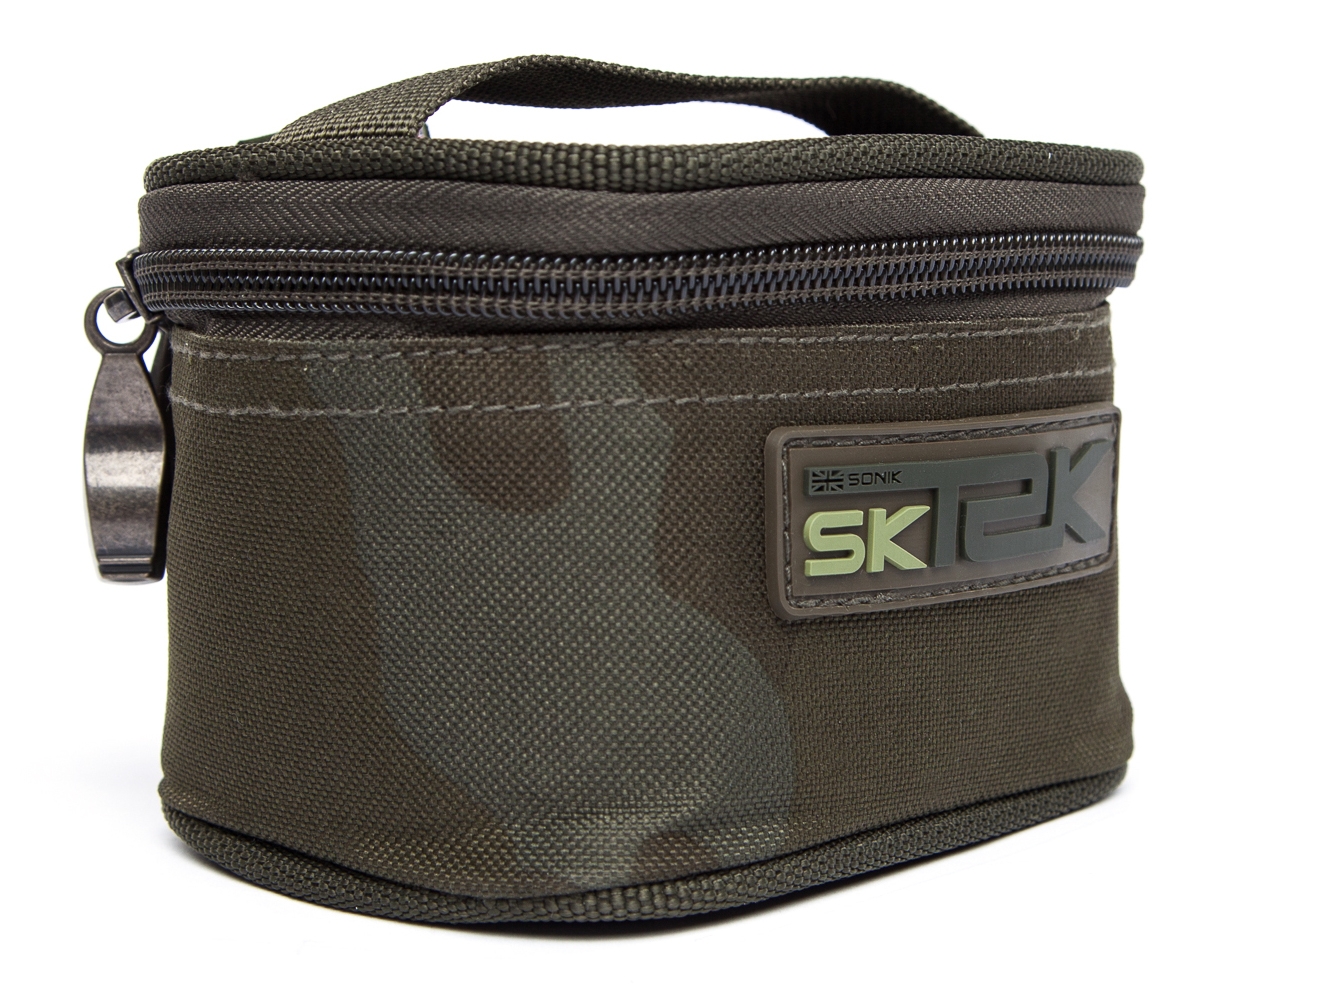 Borsa Sonik Sk-tek accessory pouch small